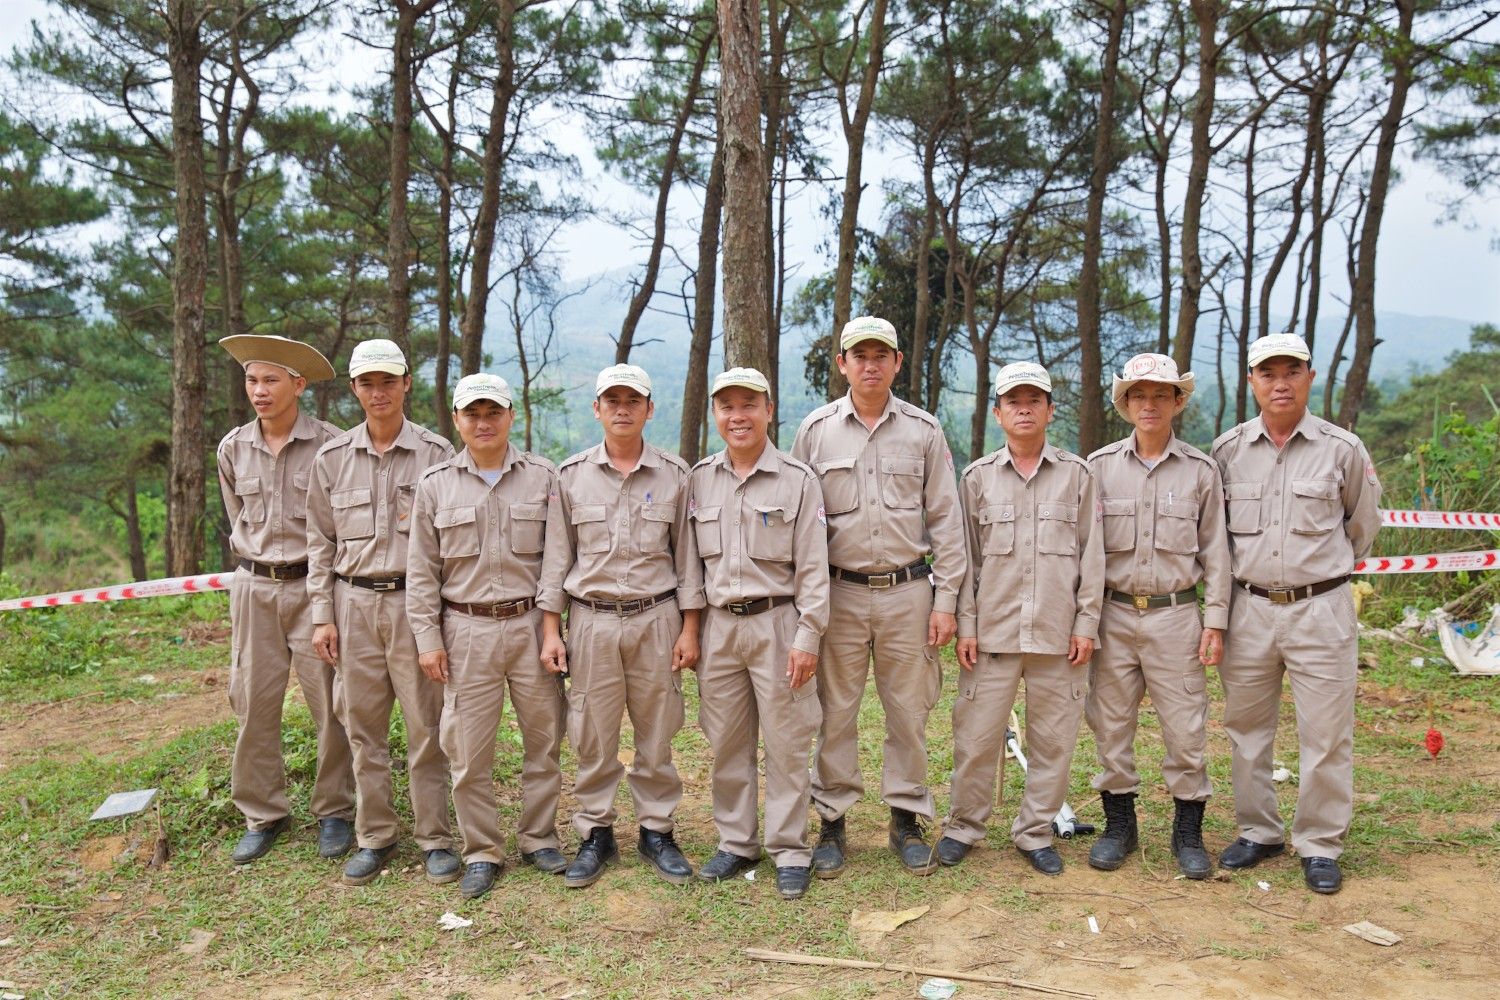 Quảng Trị Mine Action Program